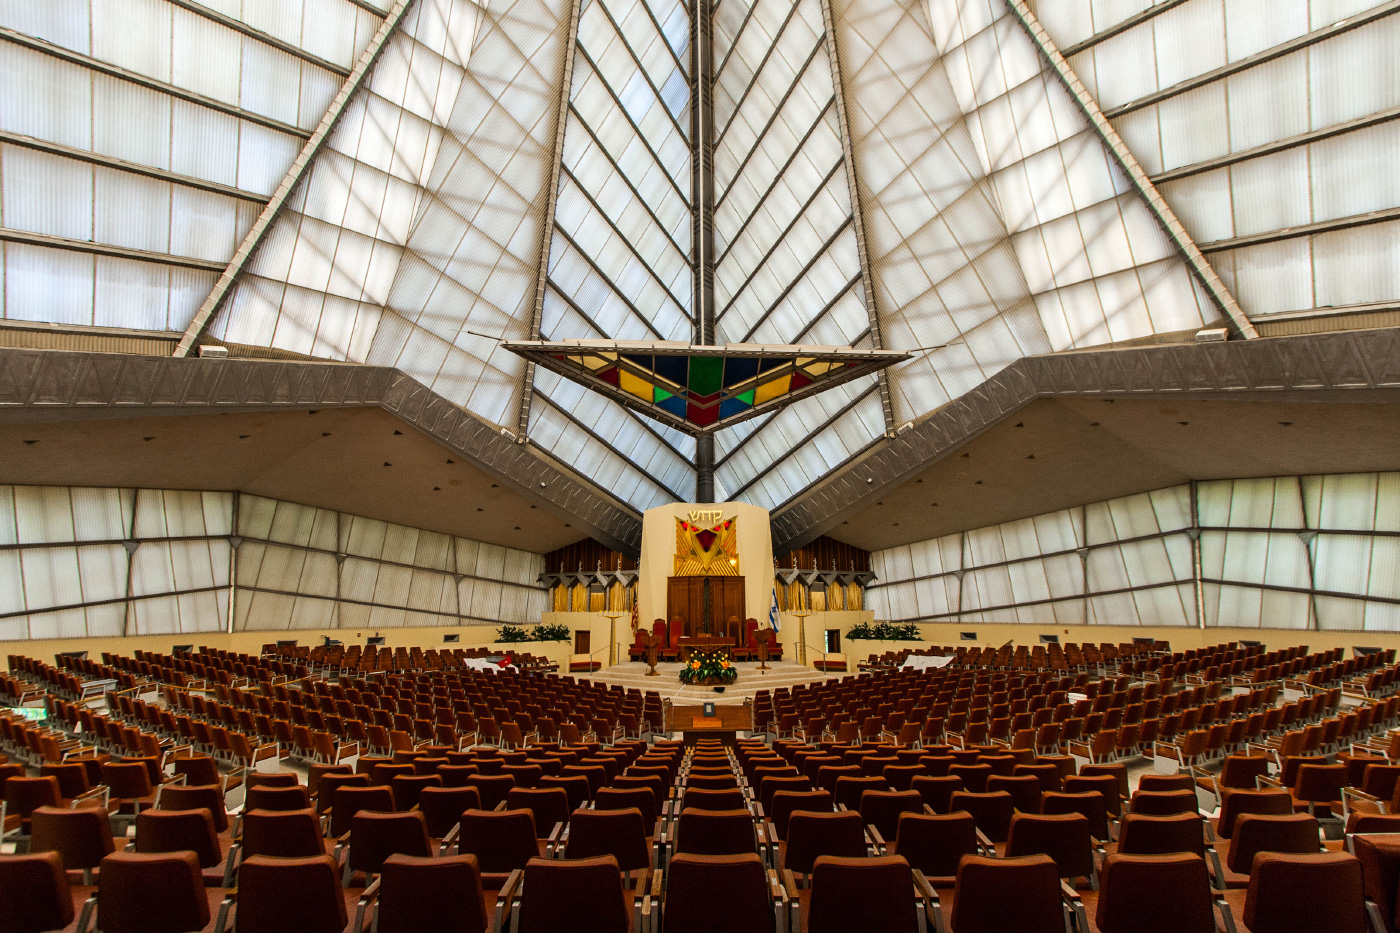 Soaring interior of a glass synagogue, Beth Sholom, designed by Frank lloyd Wright